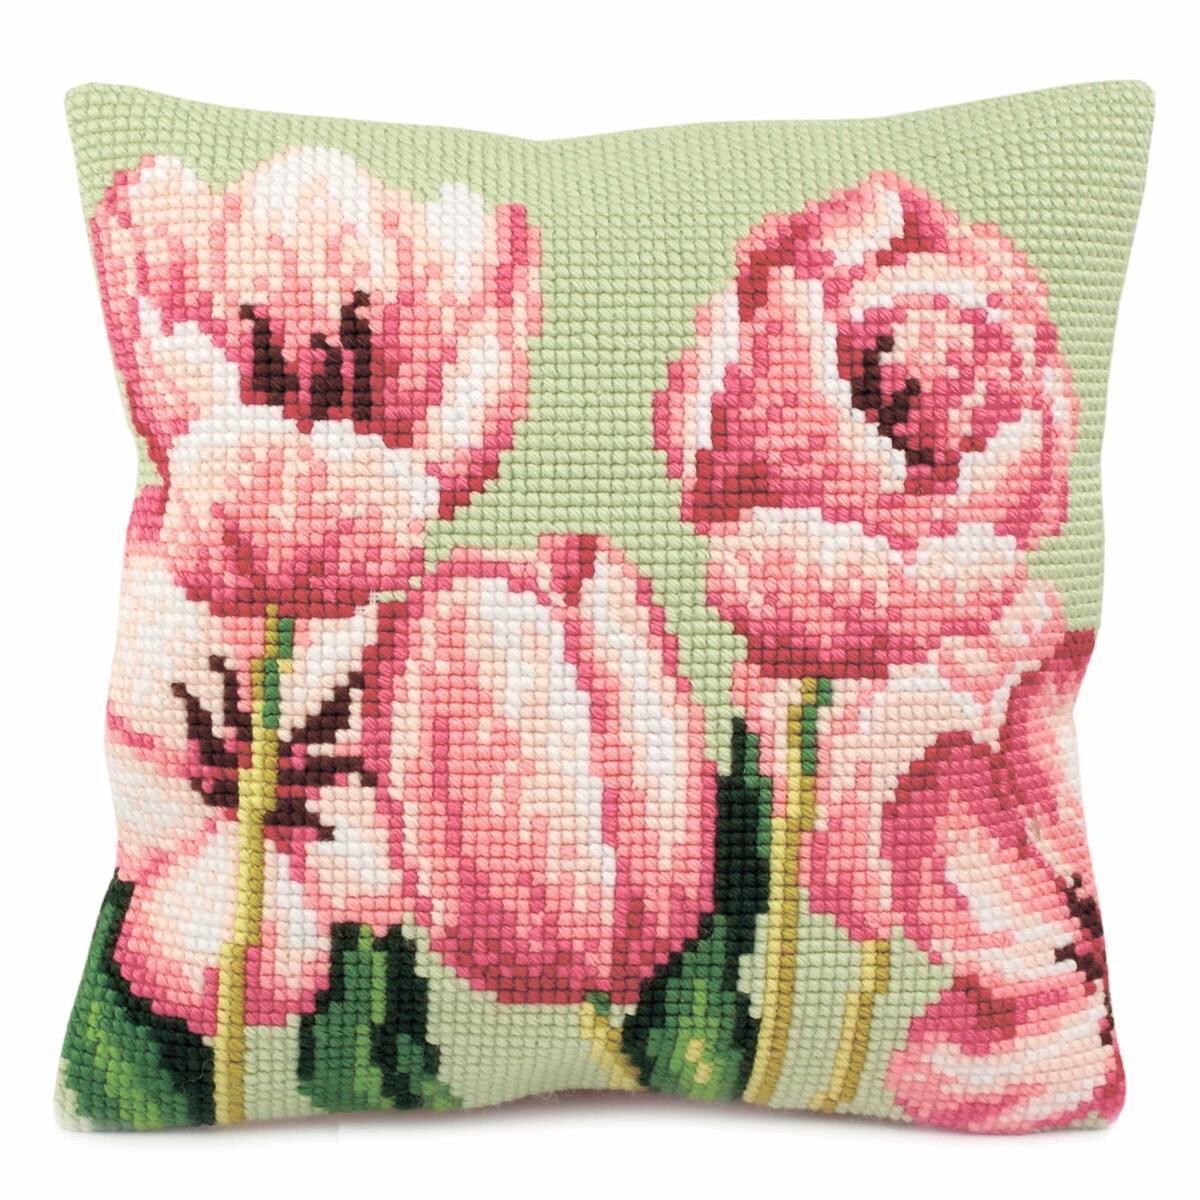 CdA stamped cross stitch kit cushion "Tulipe"...